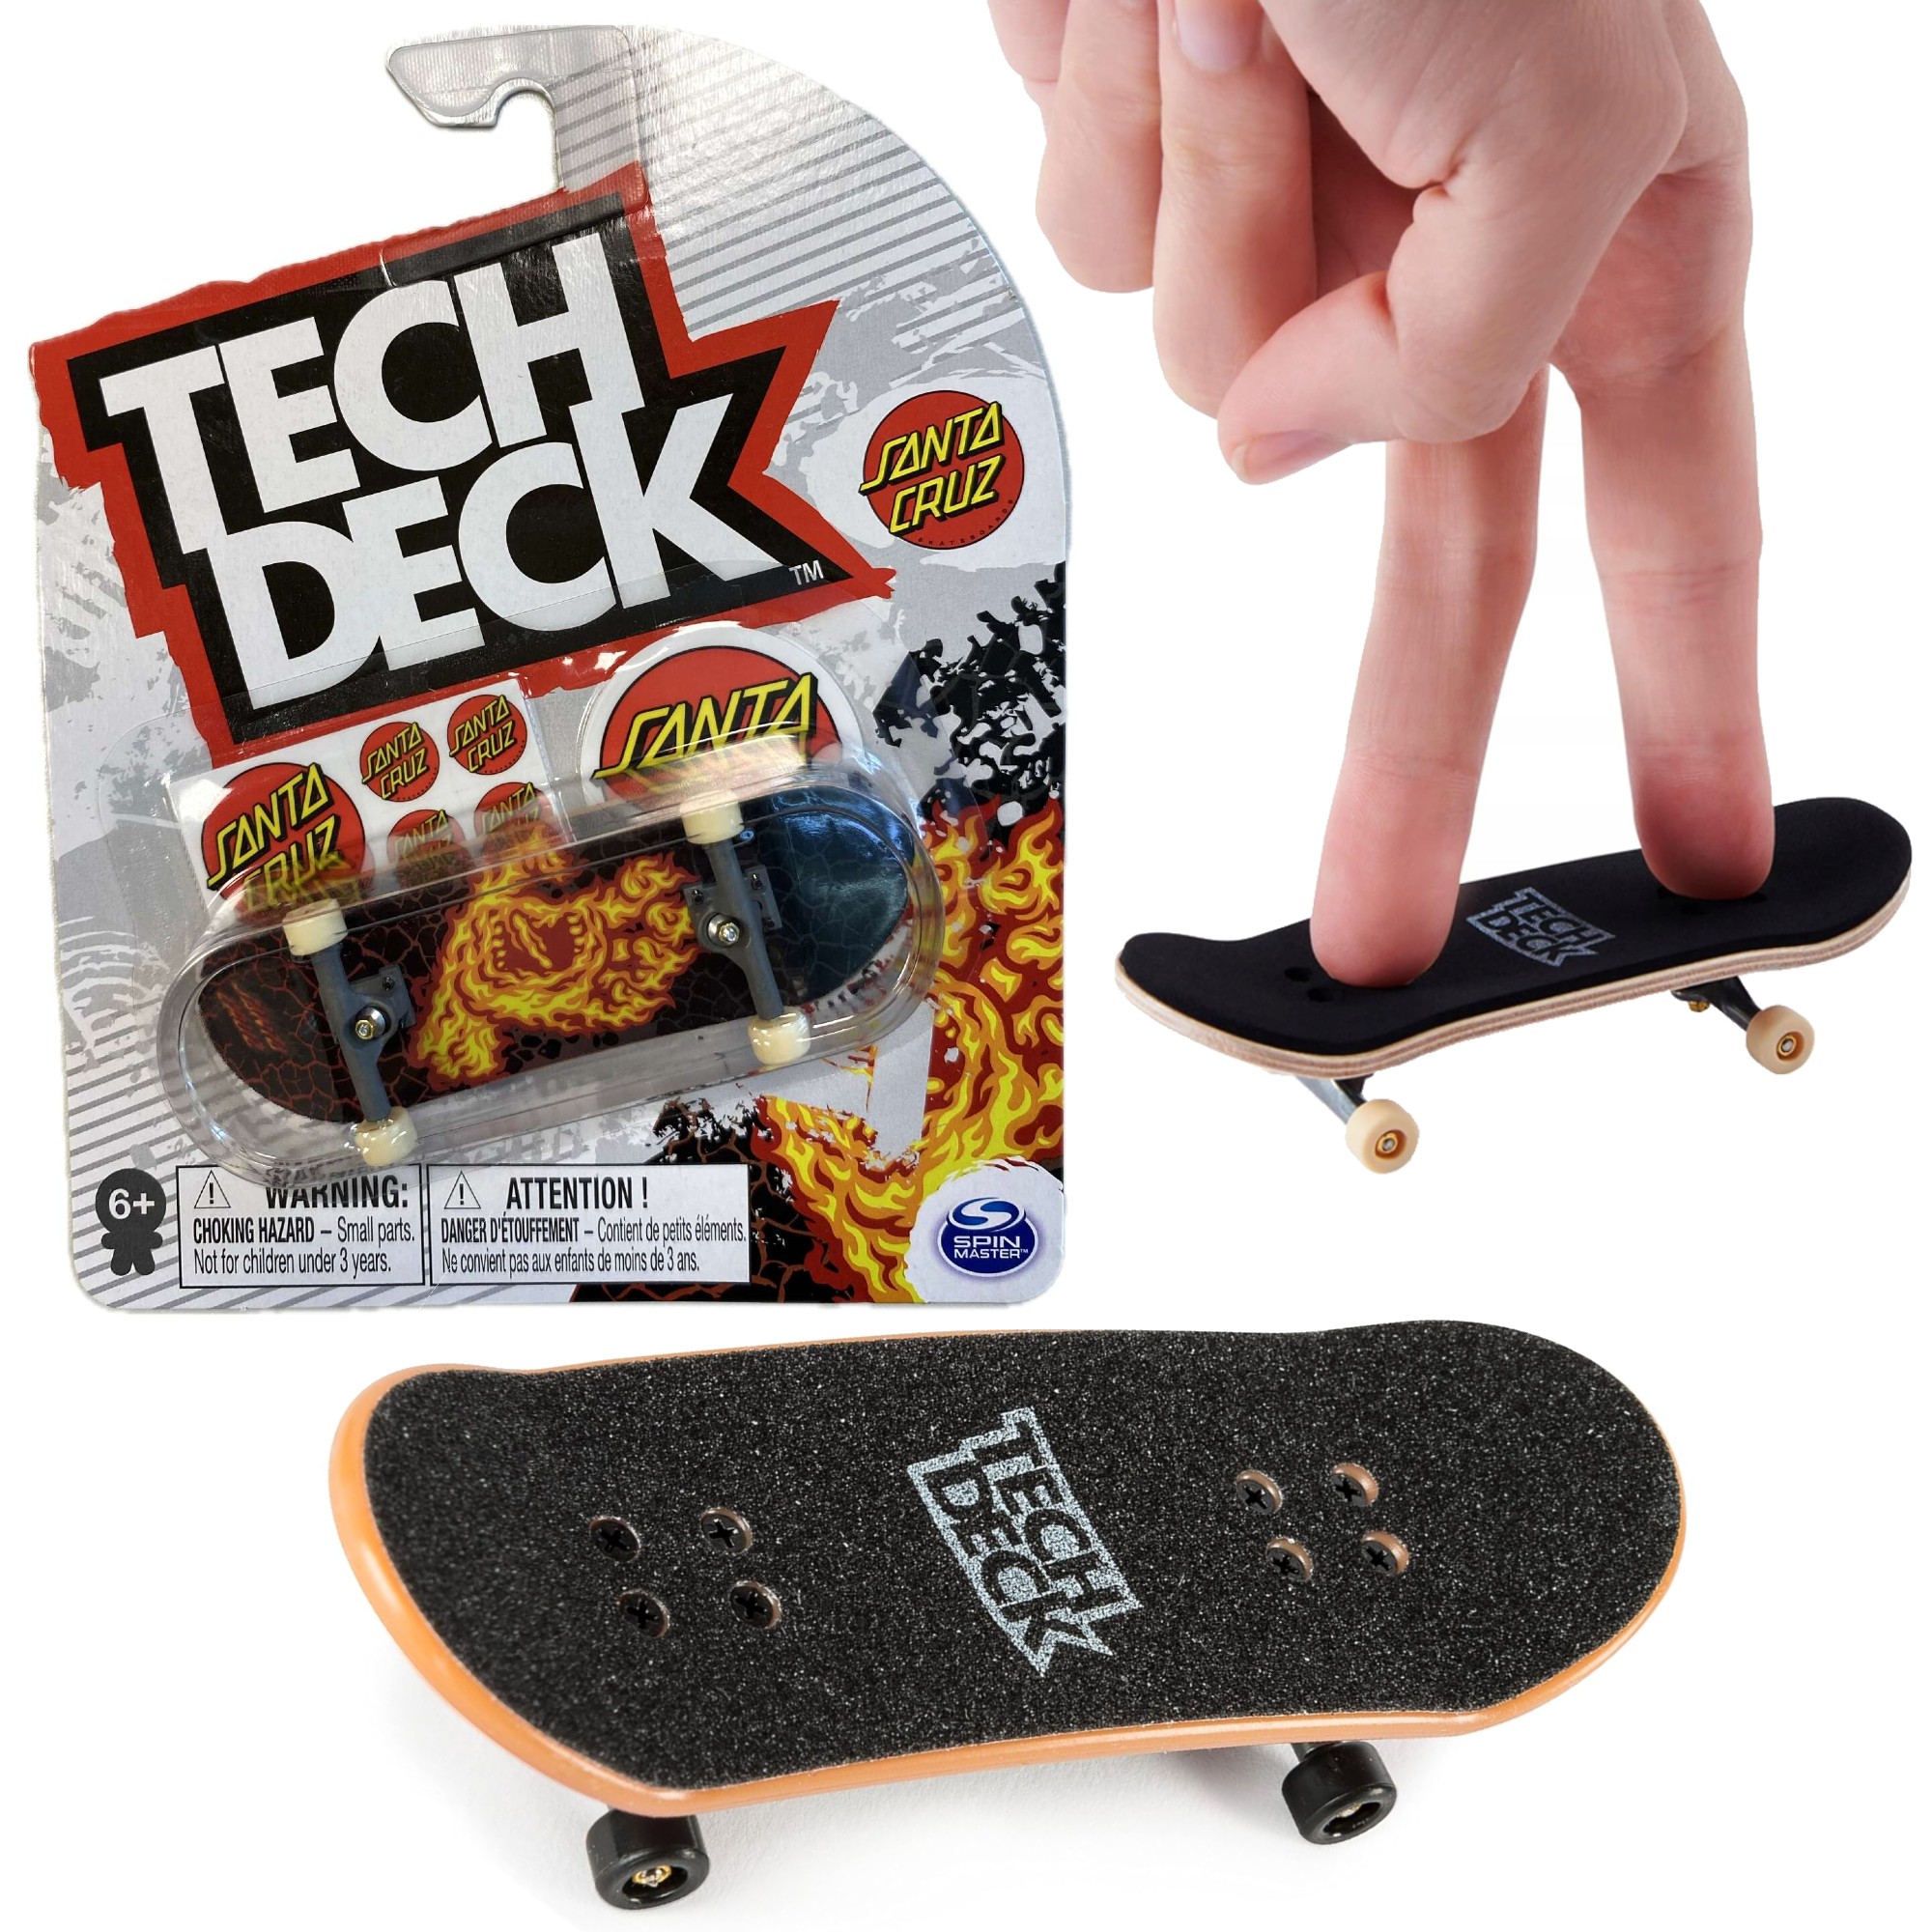 Tech Deck deskorolka fingerboard Santa Cruz Rka Ogie + naklejki